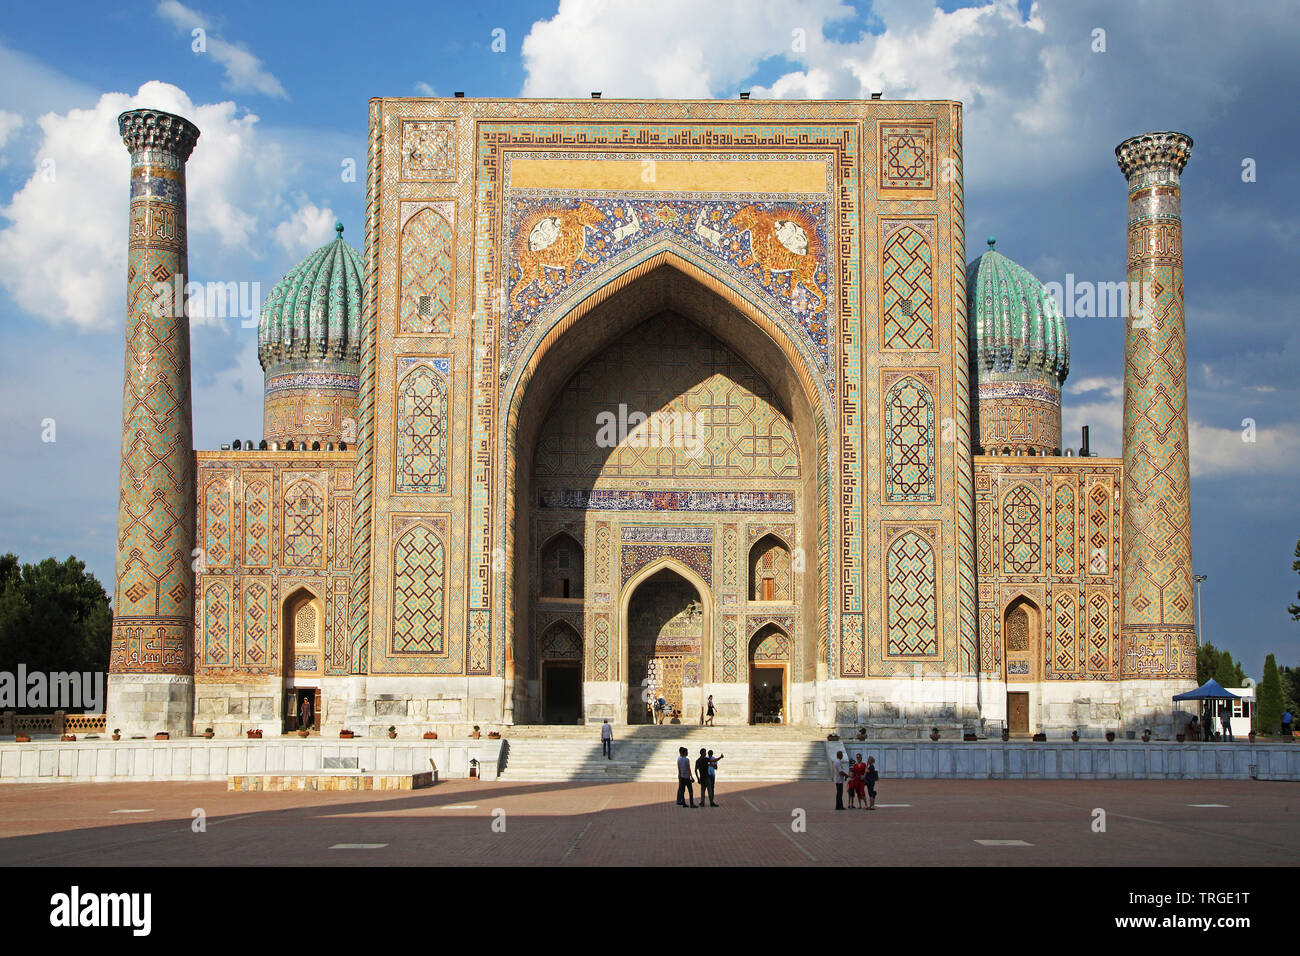 Samarkand, Uzbekistan - May 30, 2019: Front face of Sherdor madrasa in Samarkand, Uzbekistan Stock Photo